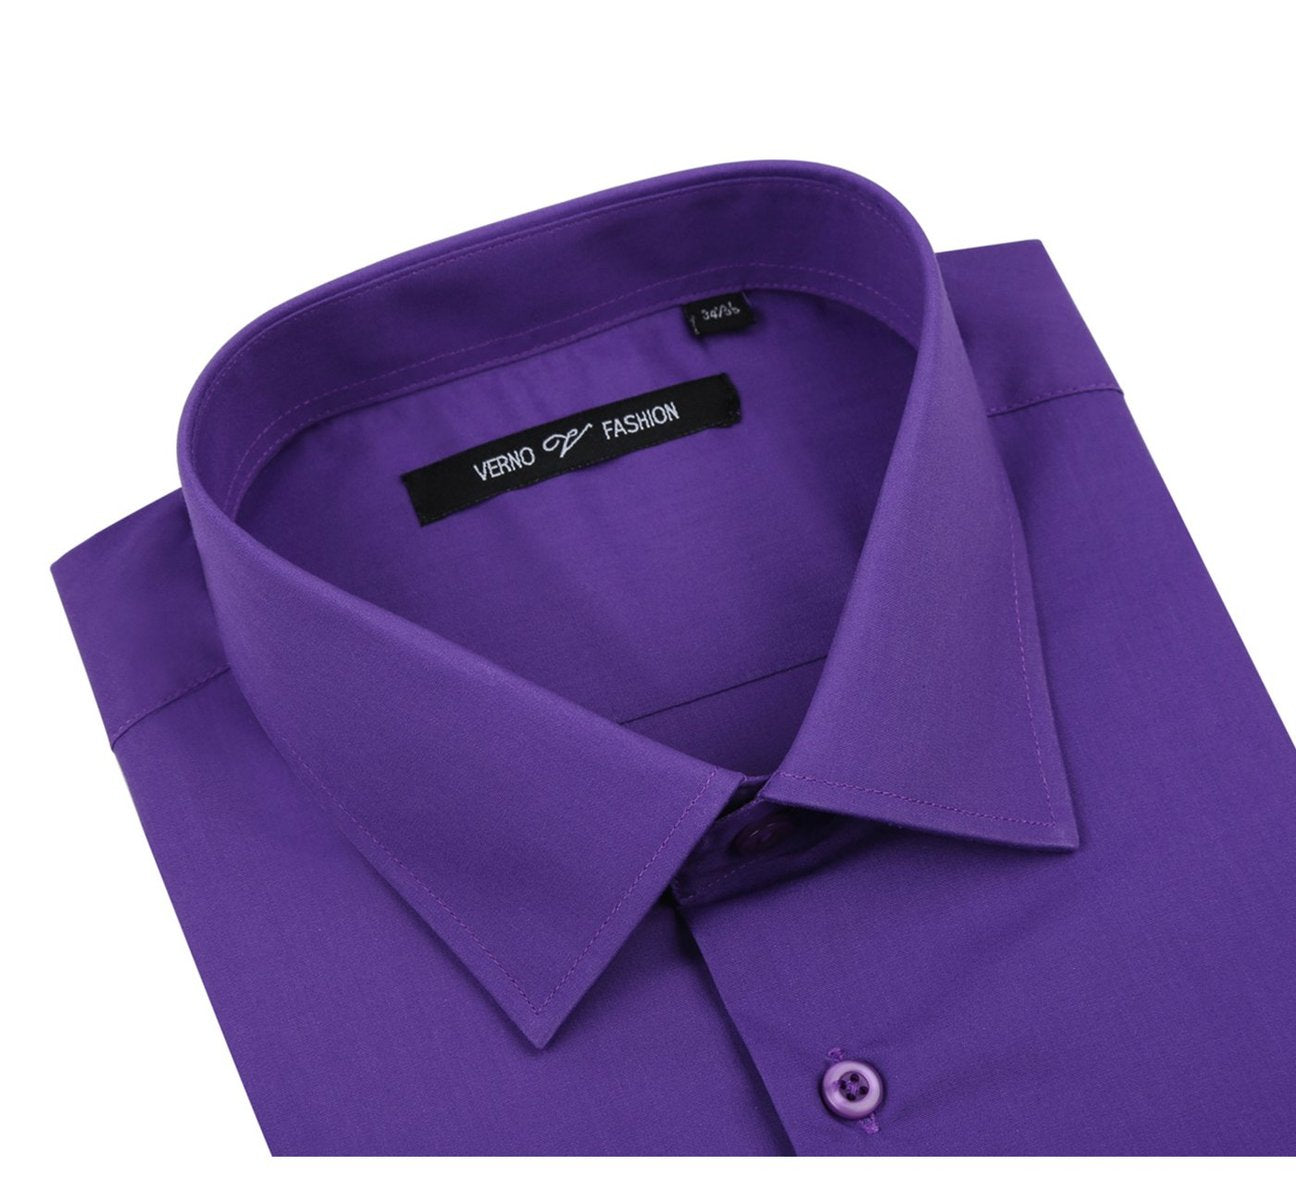 RENOIR Lilac Classic/Regular Fit Long Sleeve Spread Collar Dress Shirt TC640